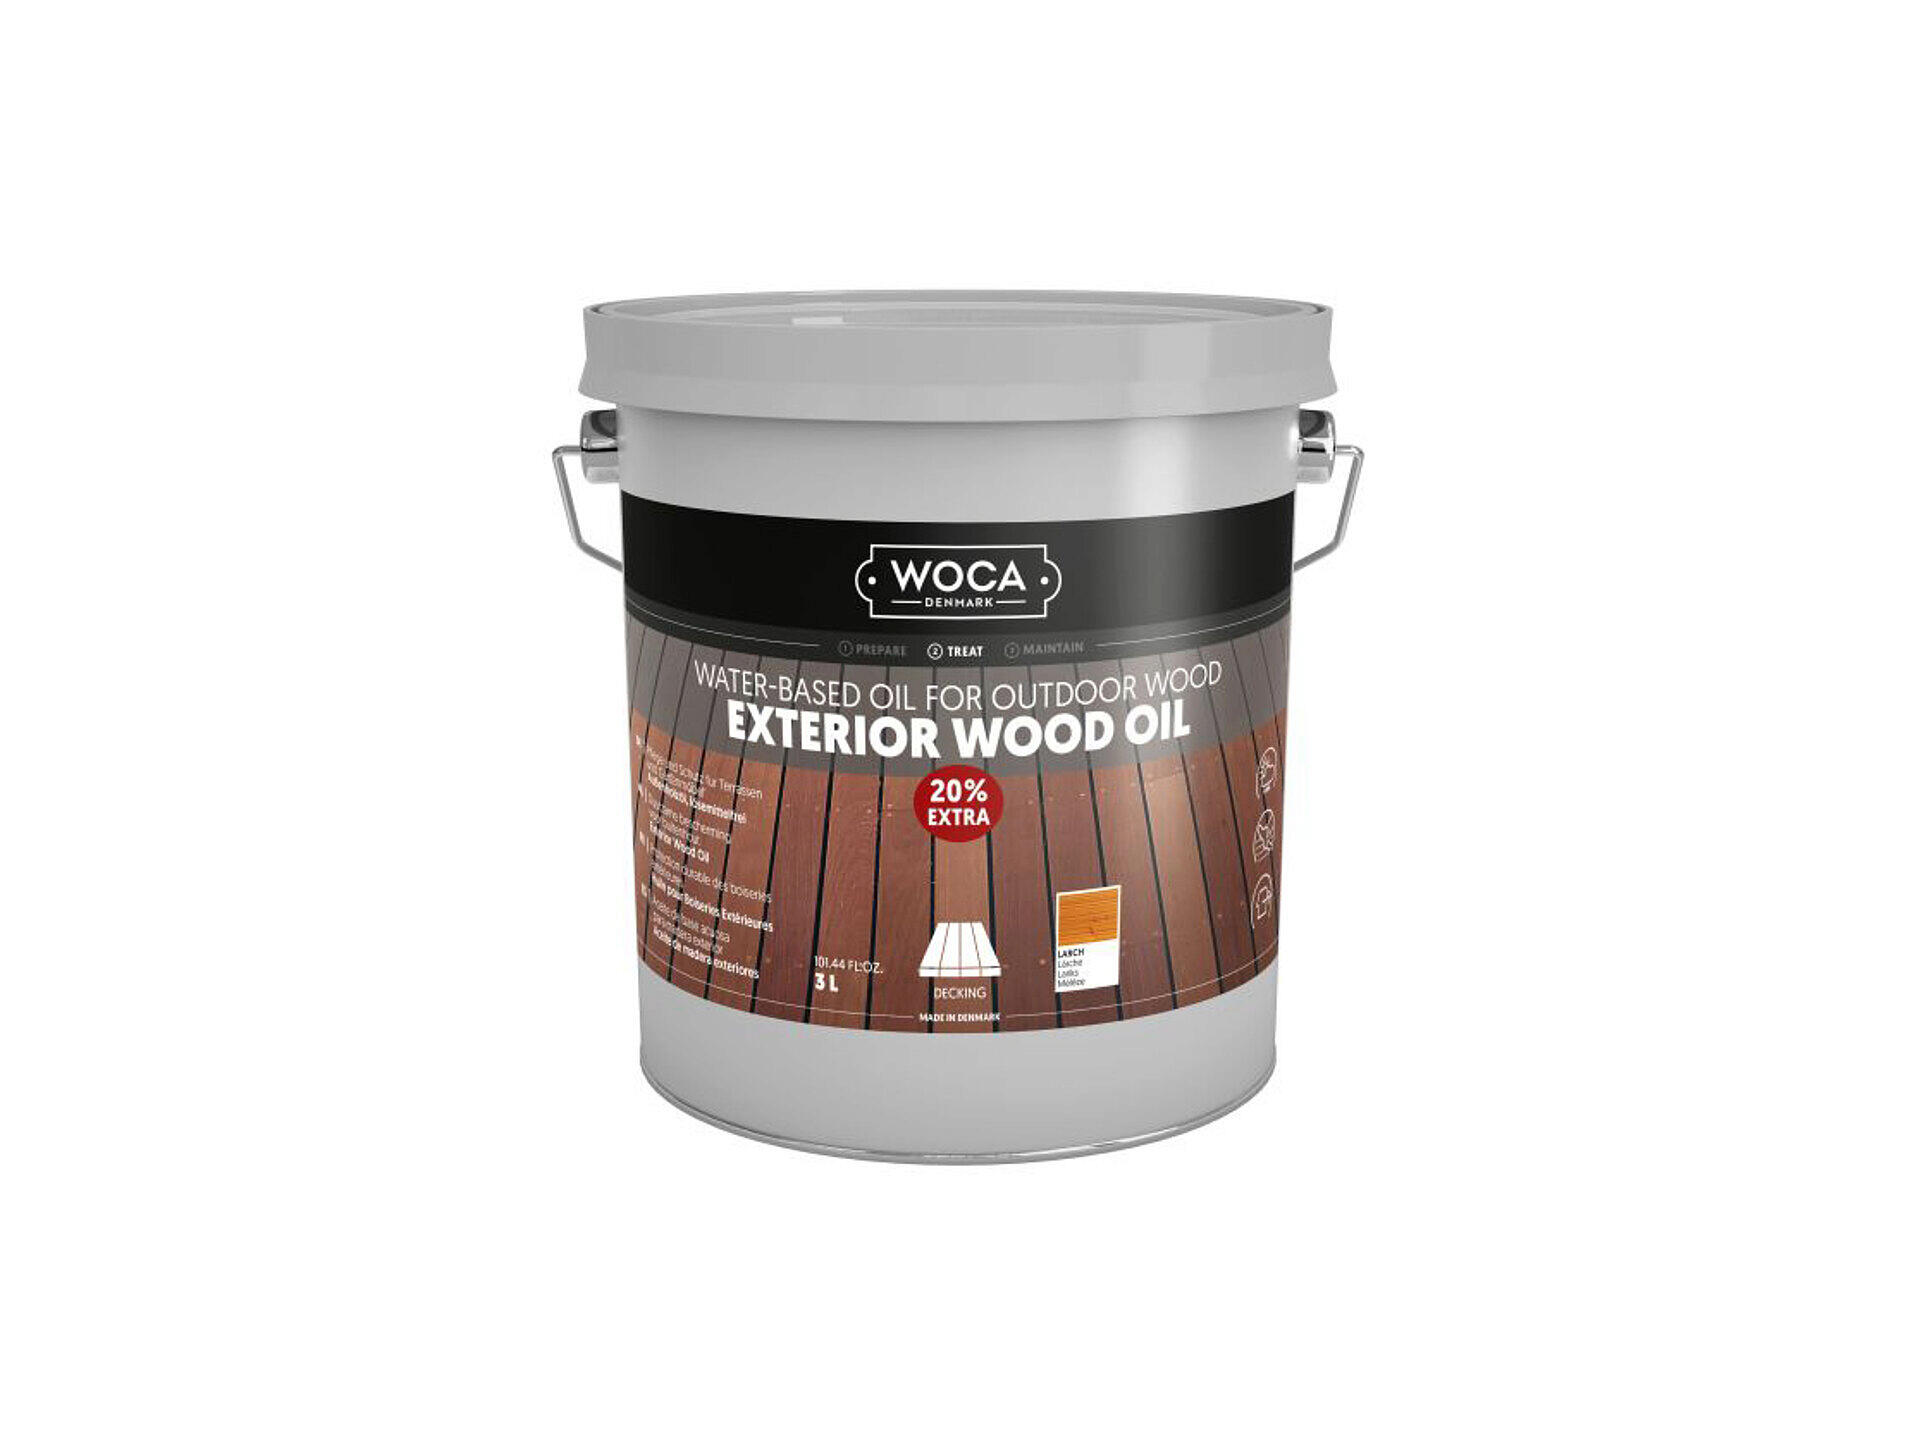 Woca Exterior Wood Oil lariks houtbescherming 3l